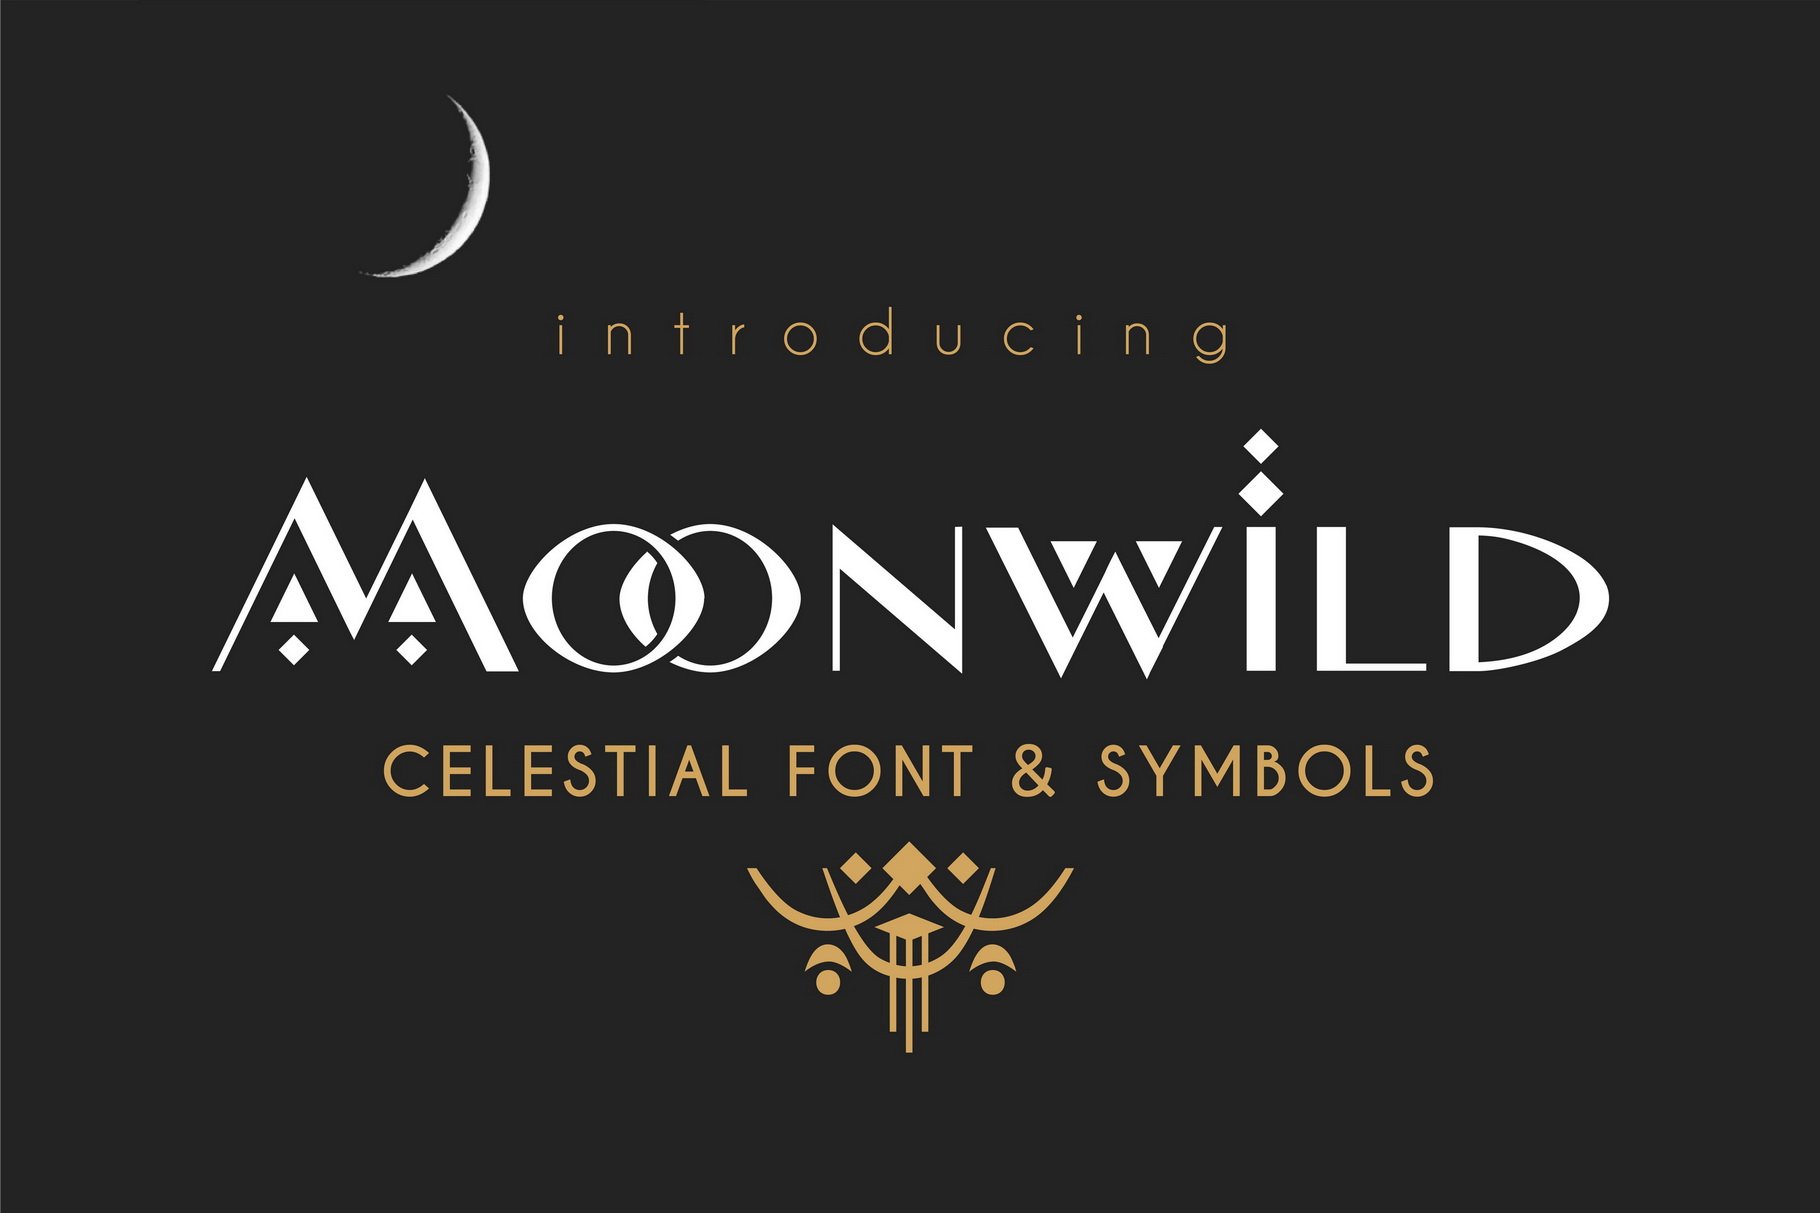 Moonwild - Celestial Font & Symbols cover image.